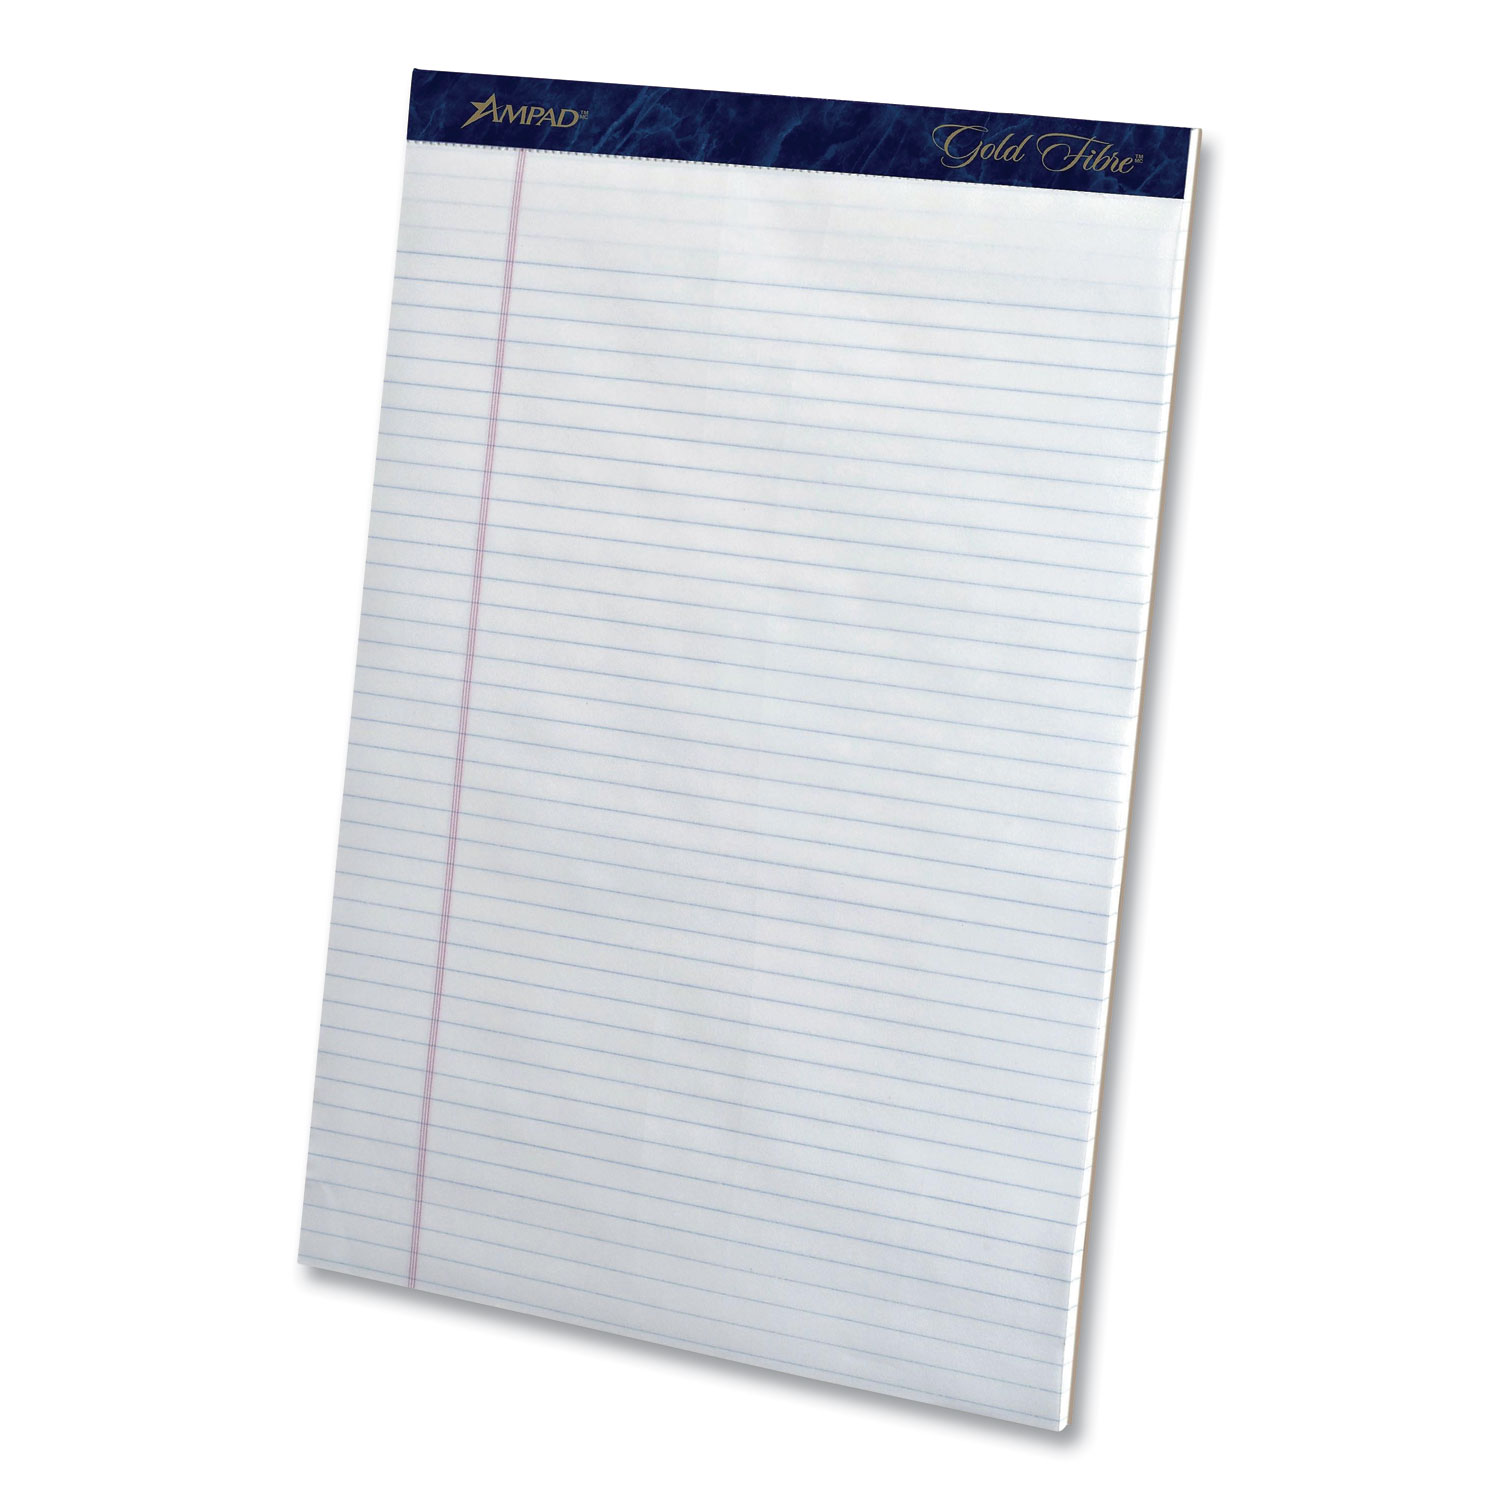 Ampad® Gold Fibre Writing Pads, Narrow Rule, 8.5 x 11.75, White, 50 Sheets, Dozen